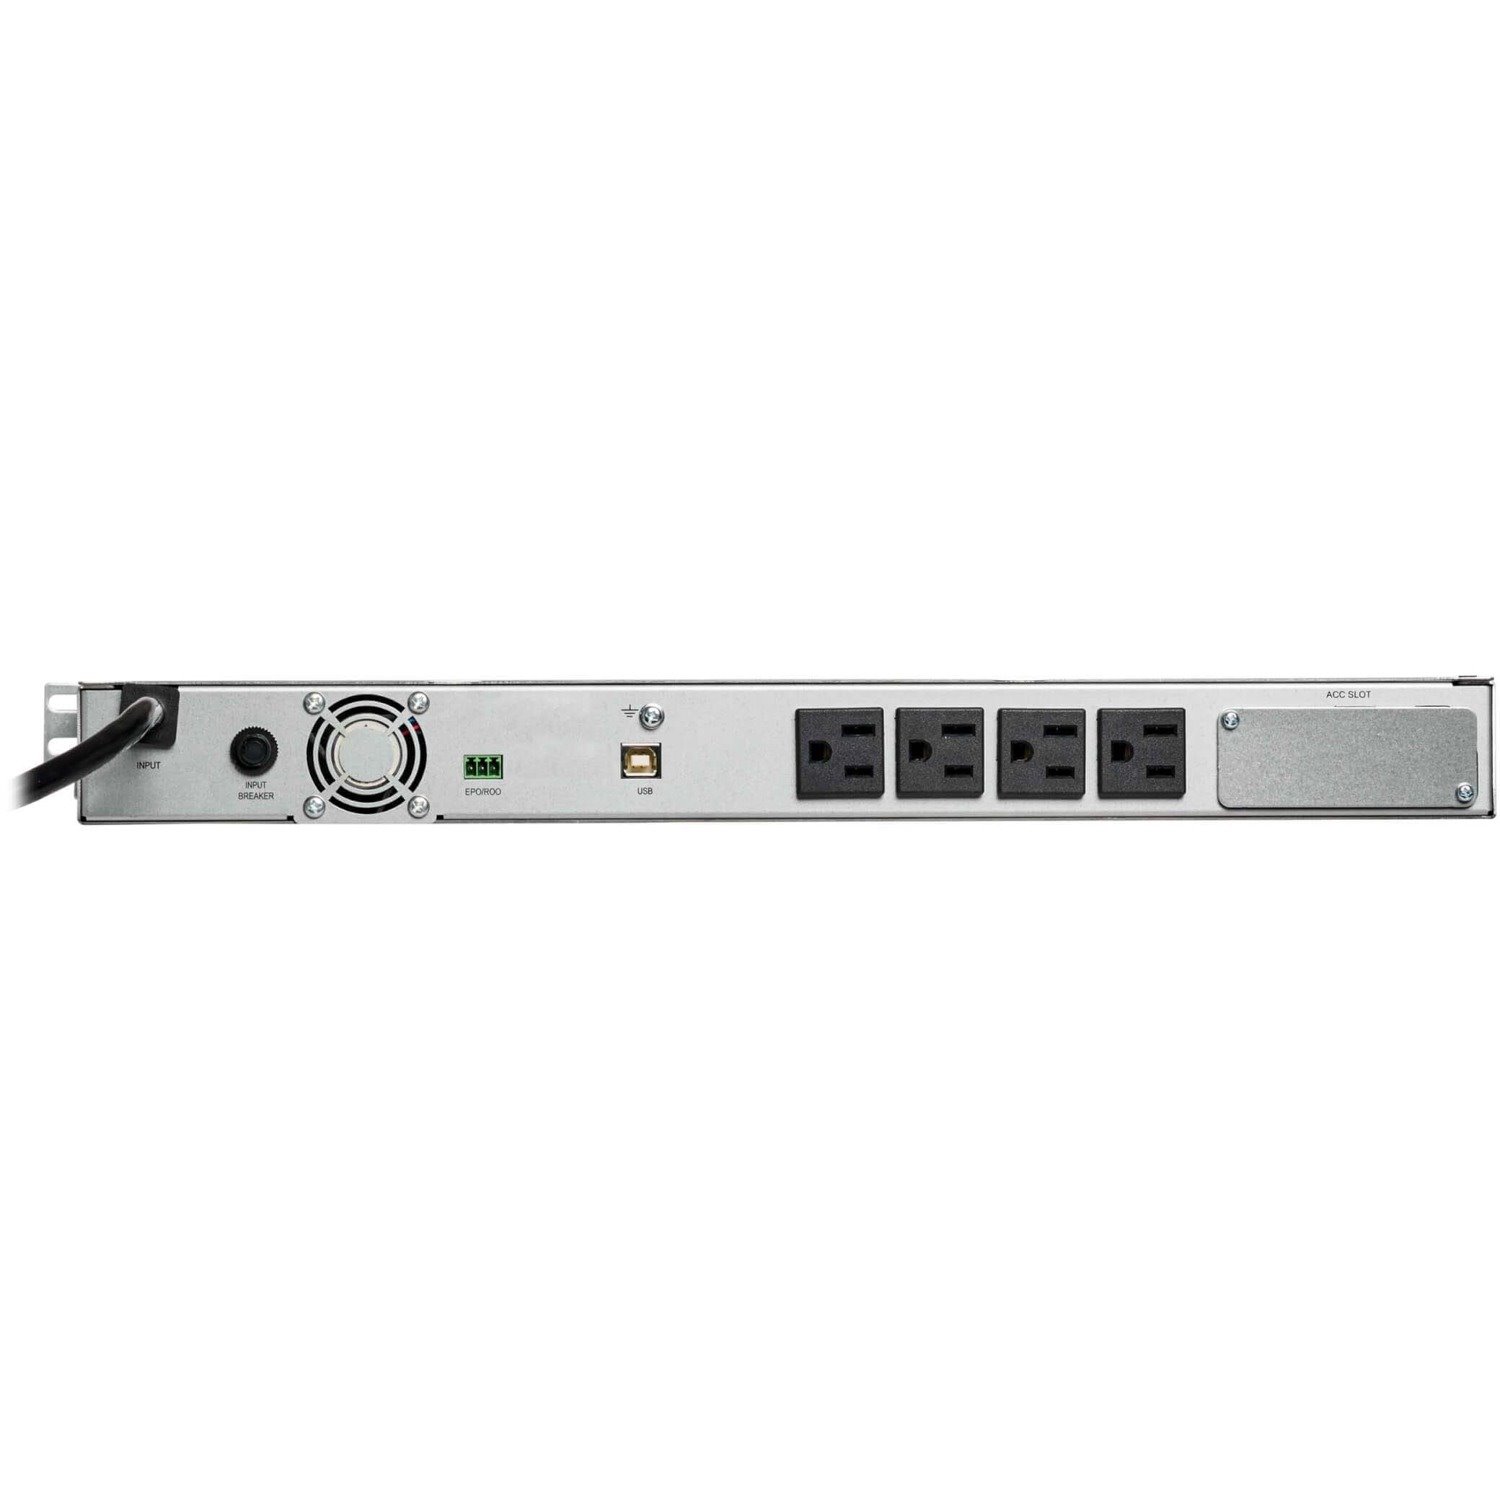 Tripp Lite by Eaton 1000VA 770W 120V Line-Interactive UPS - 5 NEMA 5-15R Outlets, AVR, Network Card Option, USB, DB9, 1U Rack/Tower